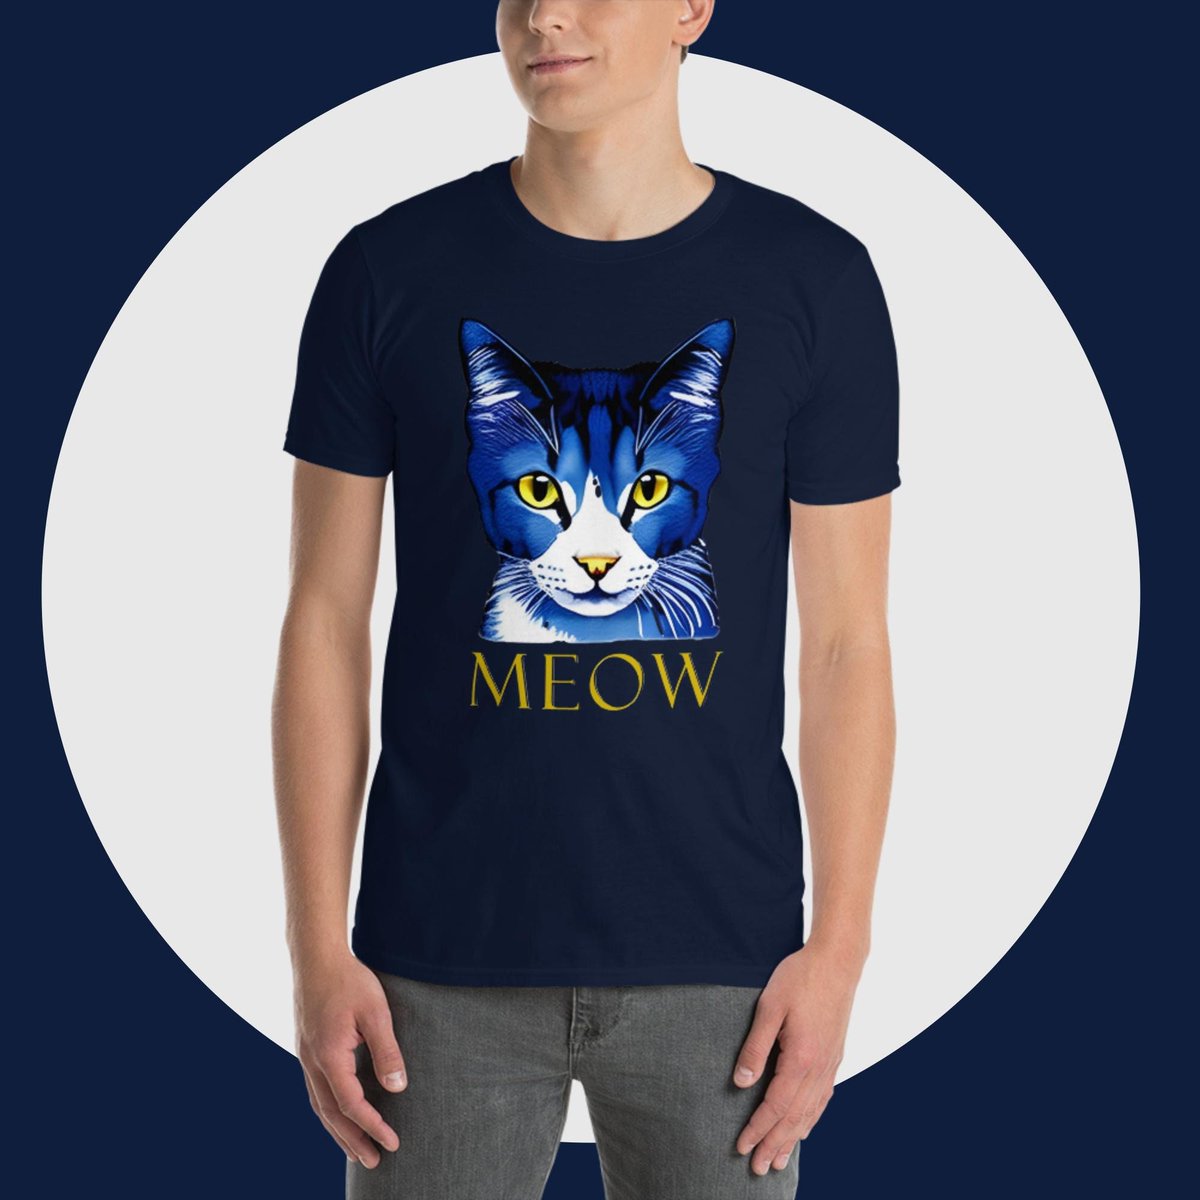 Meow Blue - Unisex T-Shirt - Cat Shirt | Gift Tees | Cute Meow Cat Lover Tee | Cat Lovers T-Shirt | Meow Shirt | Cat Owner Gift | Cute Cat etsy.me/3VhKe4U #blue #cats #tshirts #cutecatfaceshirt #meowtshirt #catlovertshirt #meowcattshirt #giftforcatmom